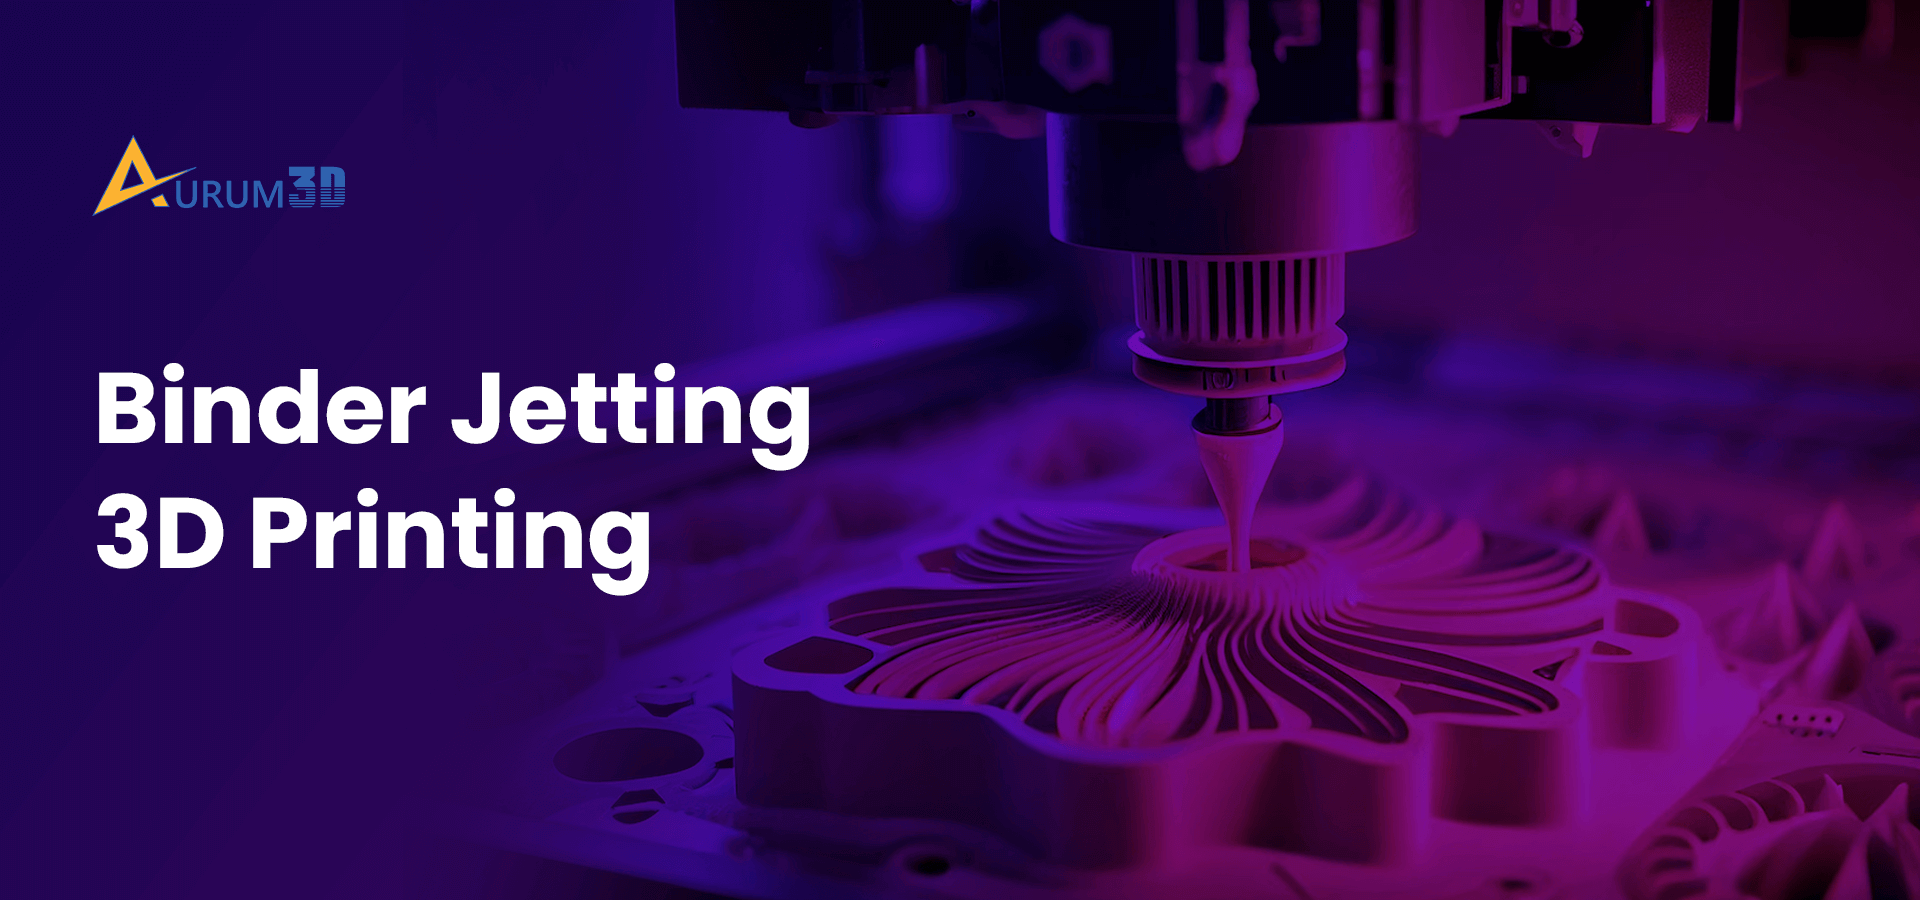 Binder Jetting 3D Printing